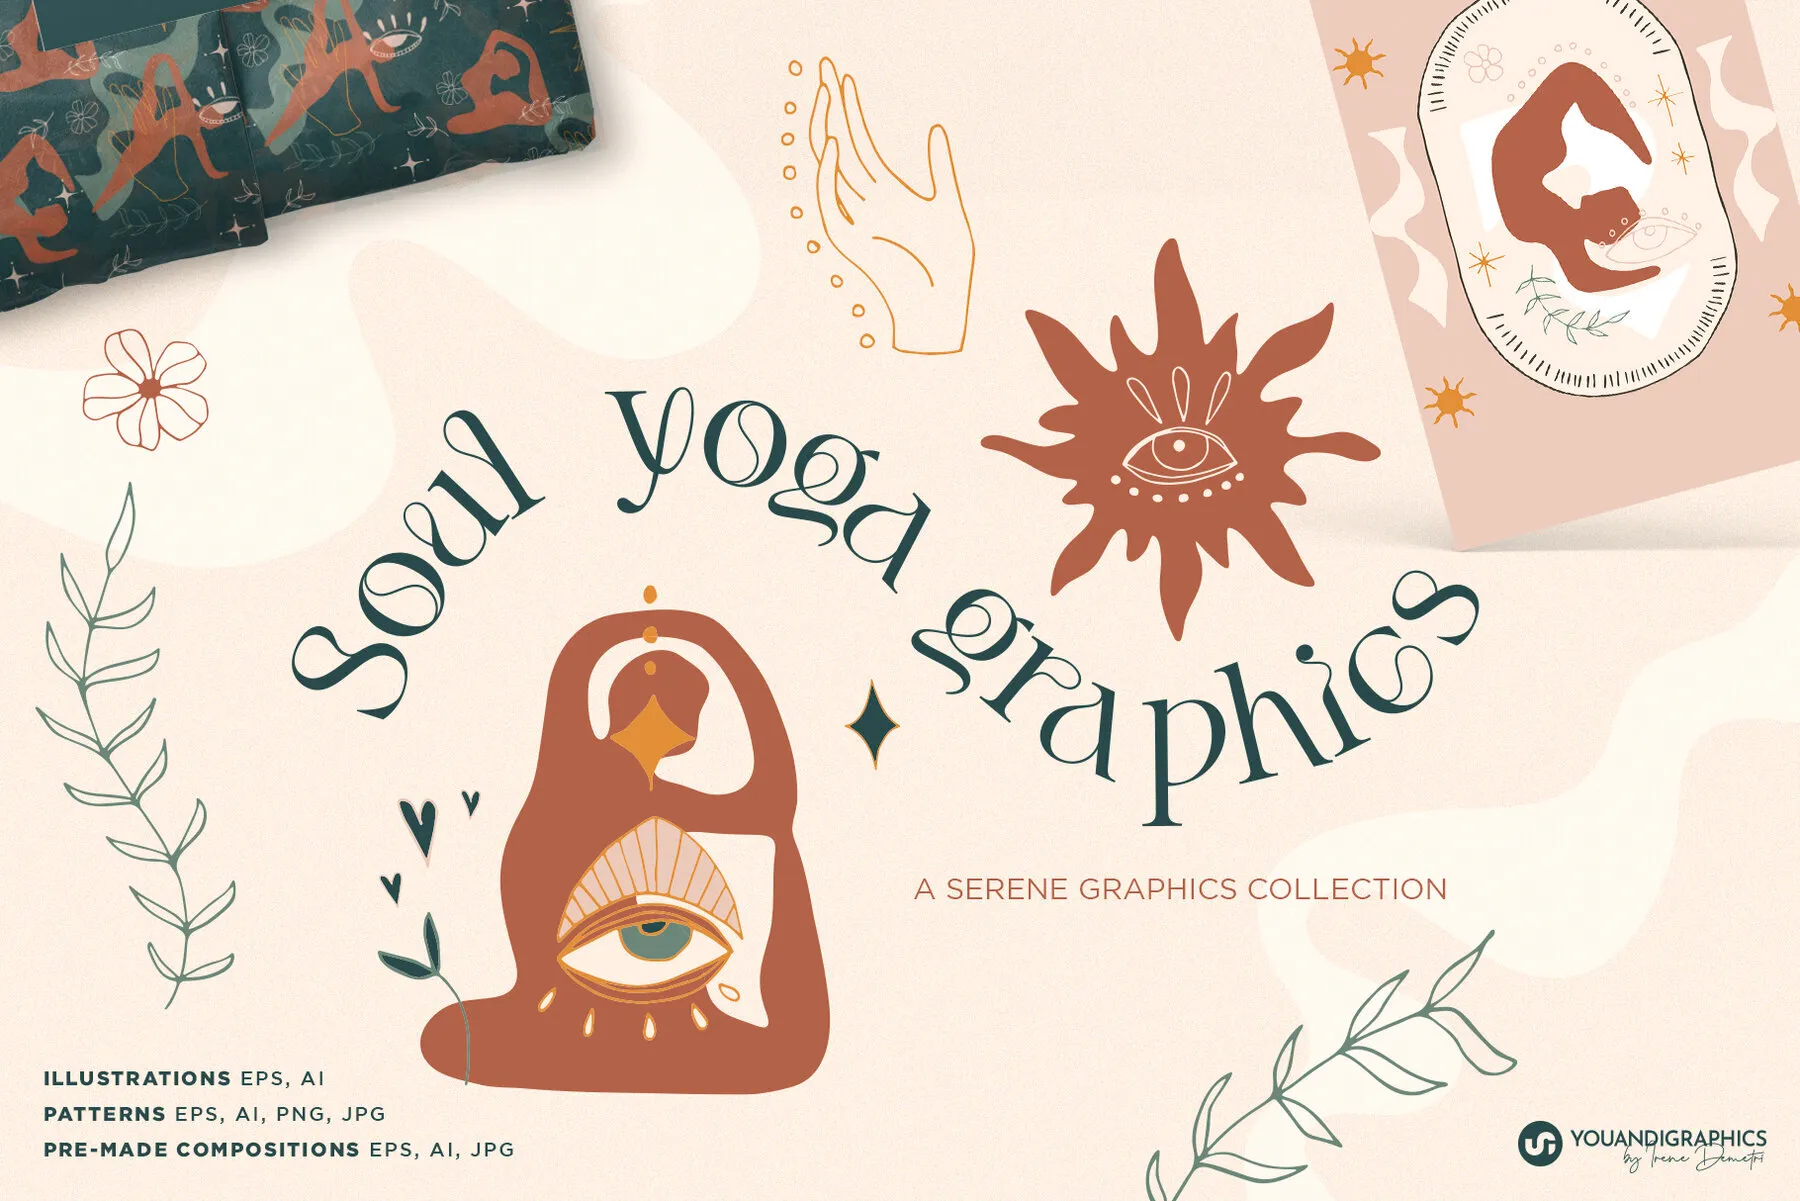 Soul Yoga Graphics Collection